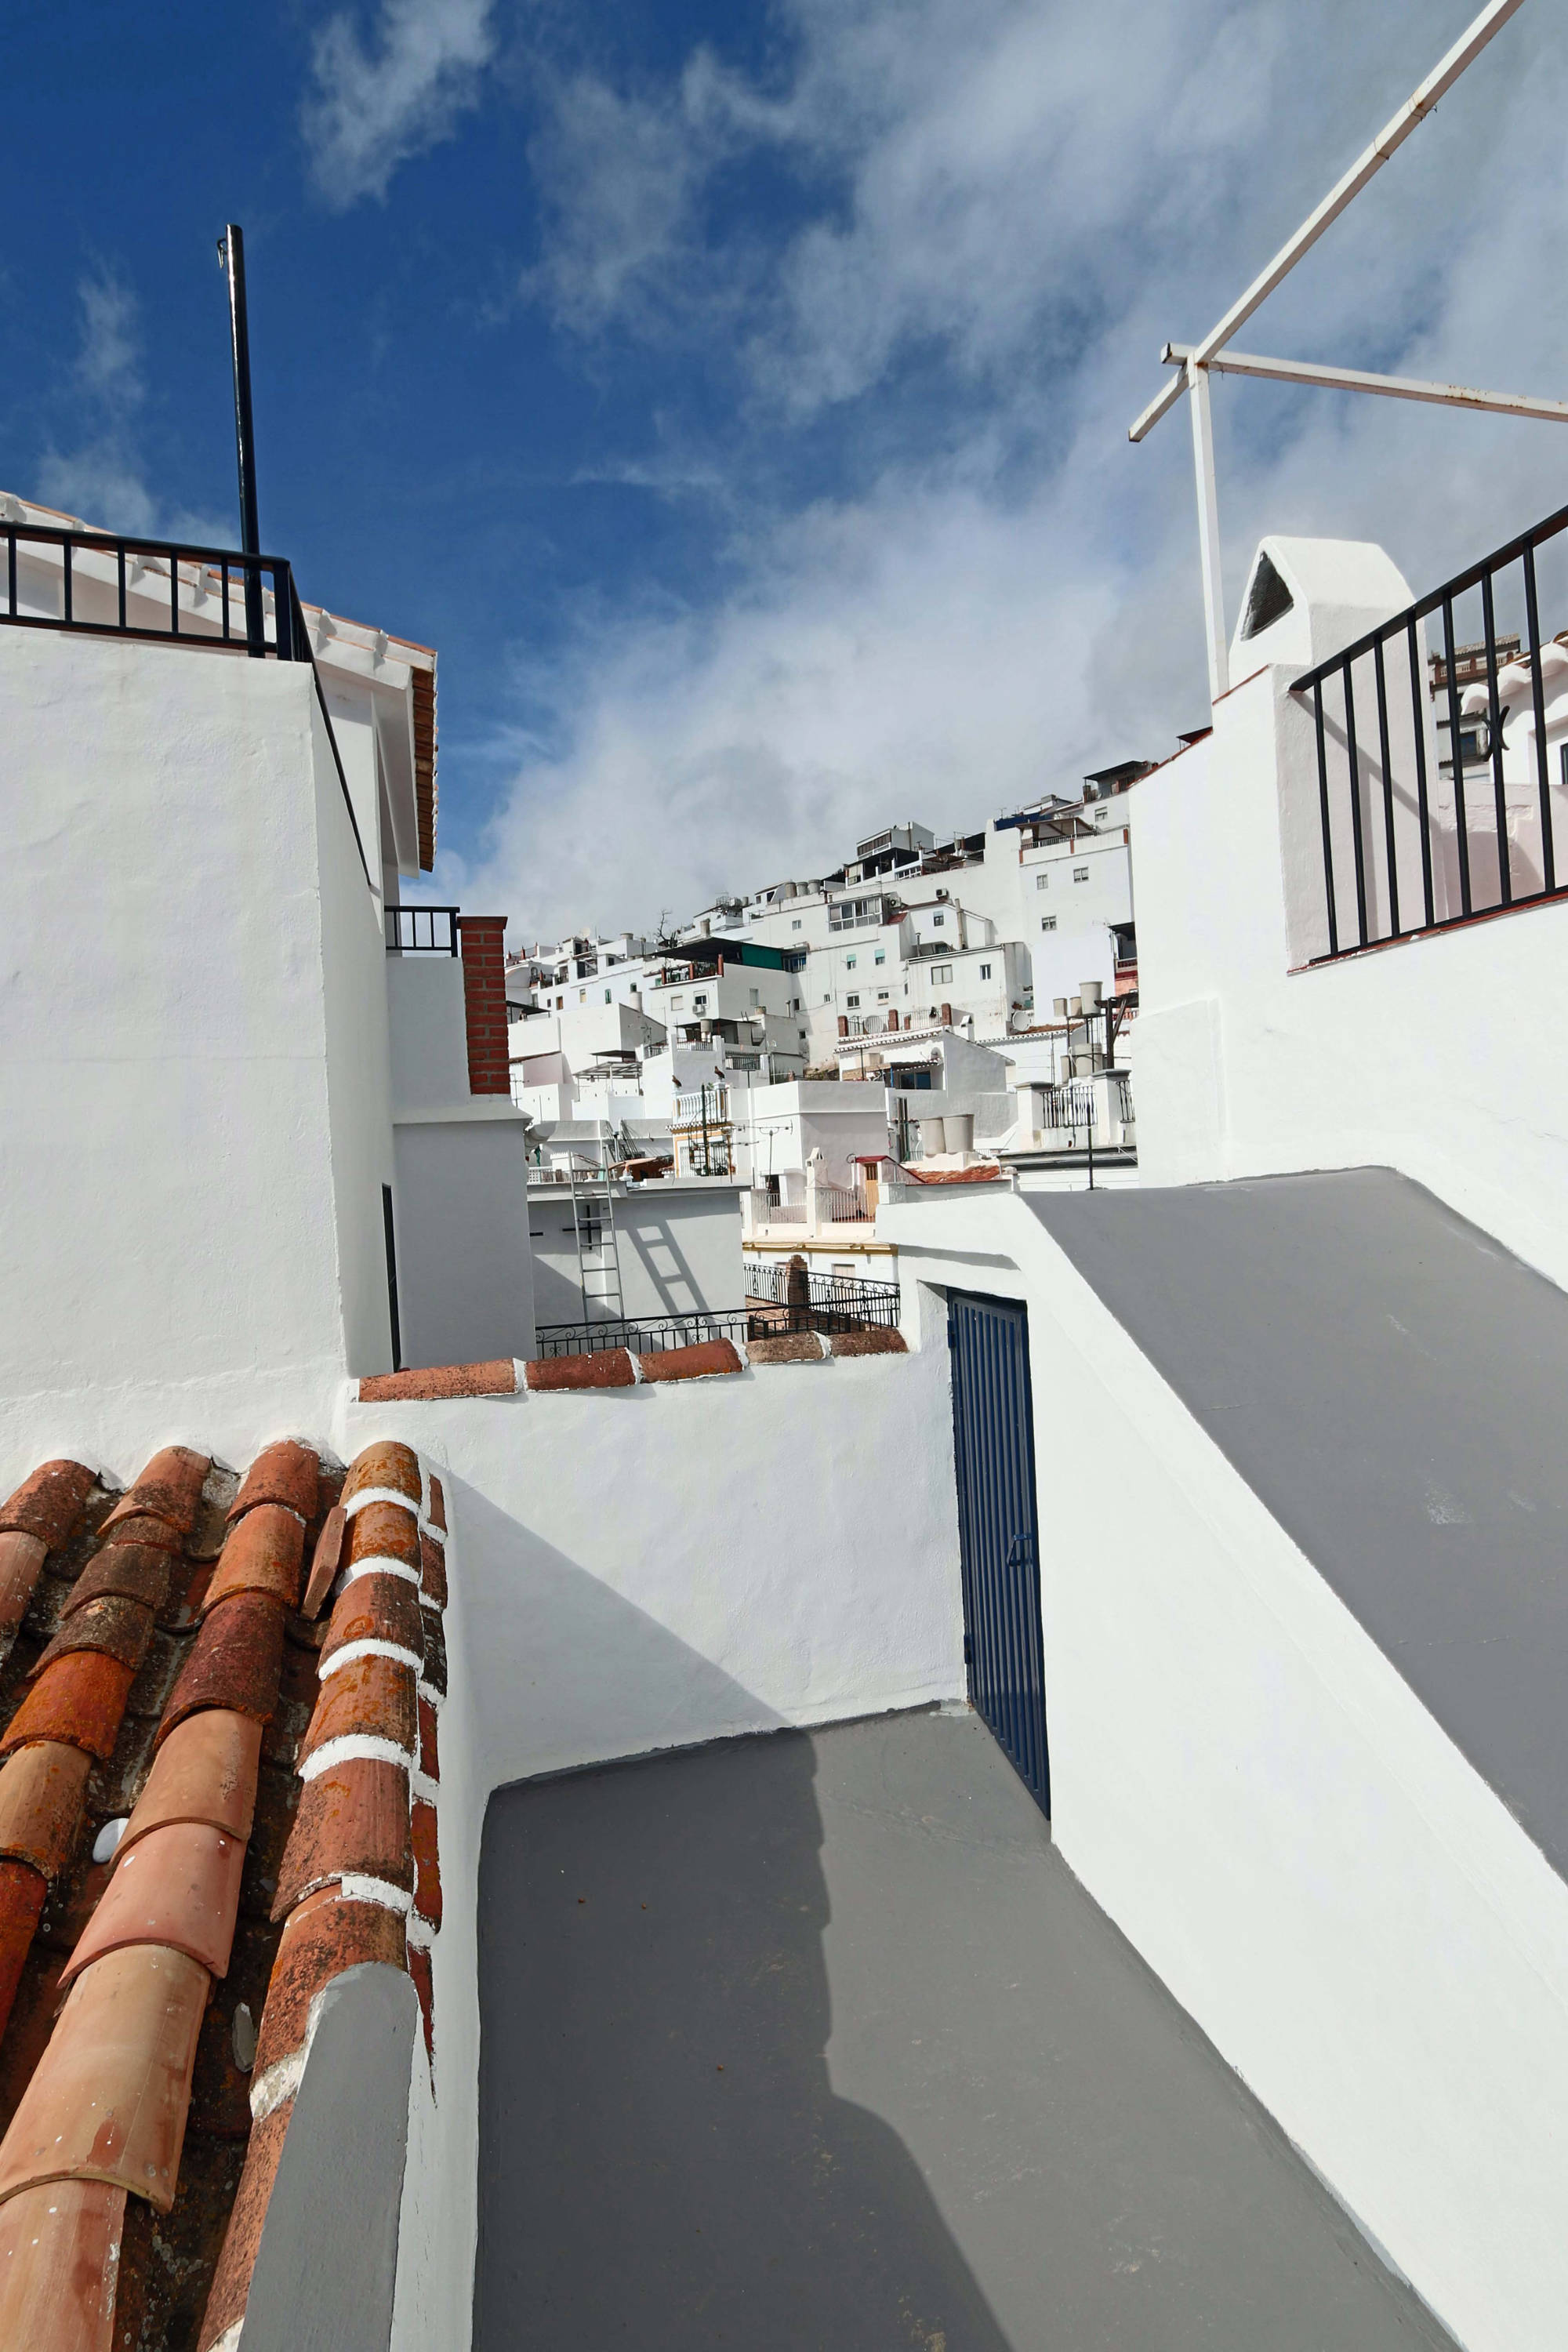 Malaga, Cordoba, Granada close to your Competa holiday house